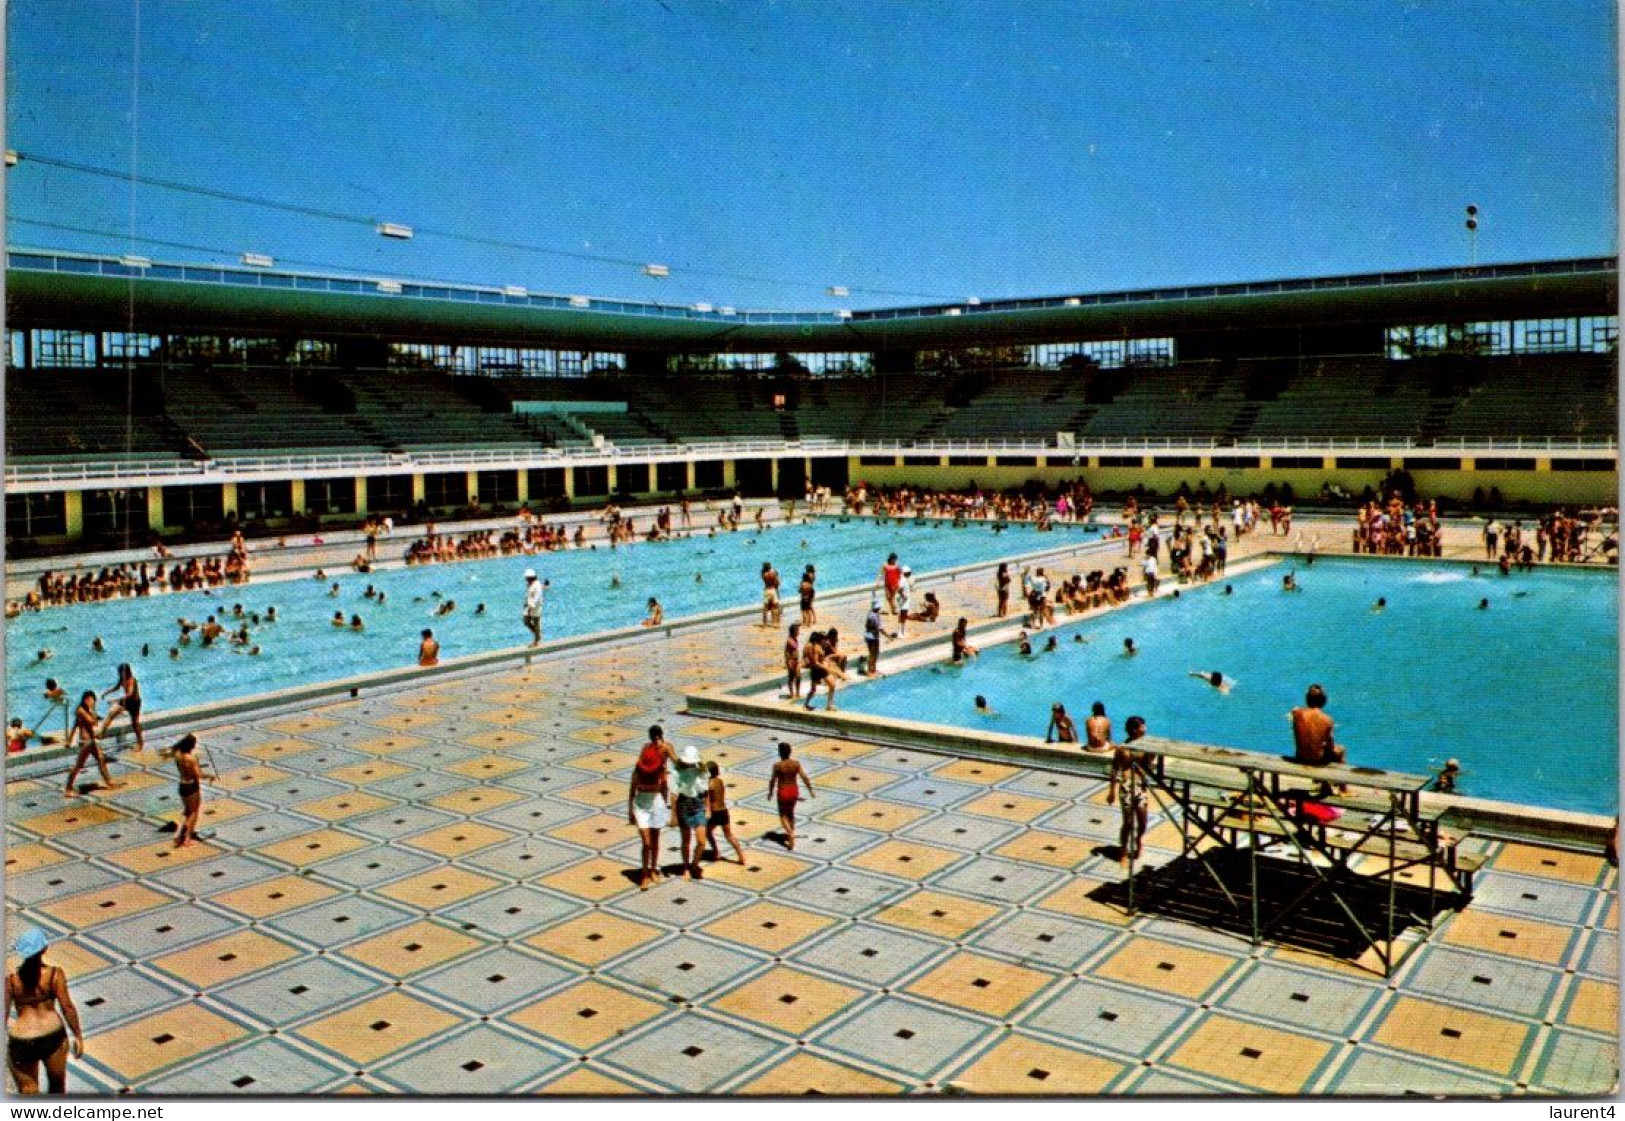 21-11-2023 (3 V 5) Australia - WA - Perth Swimming Pool - Swimming